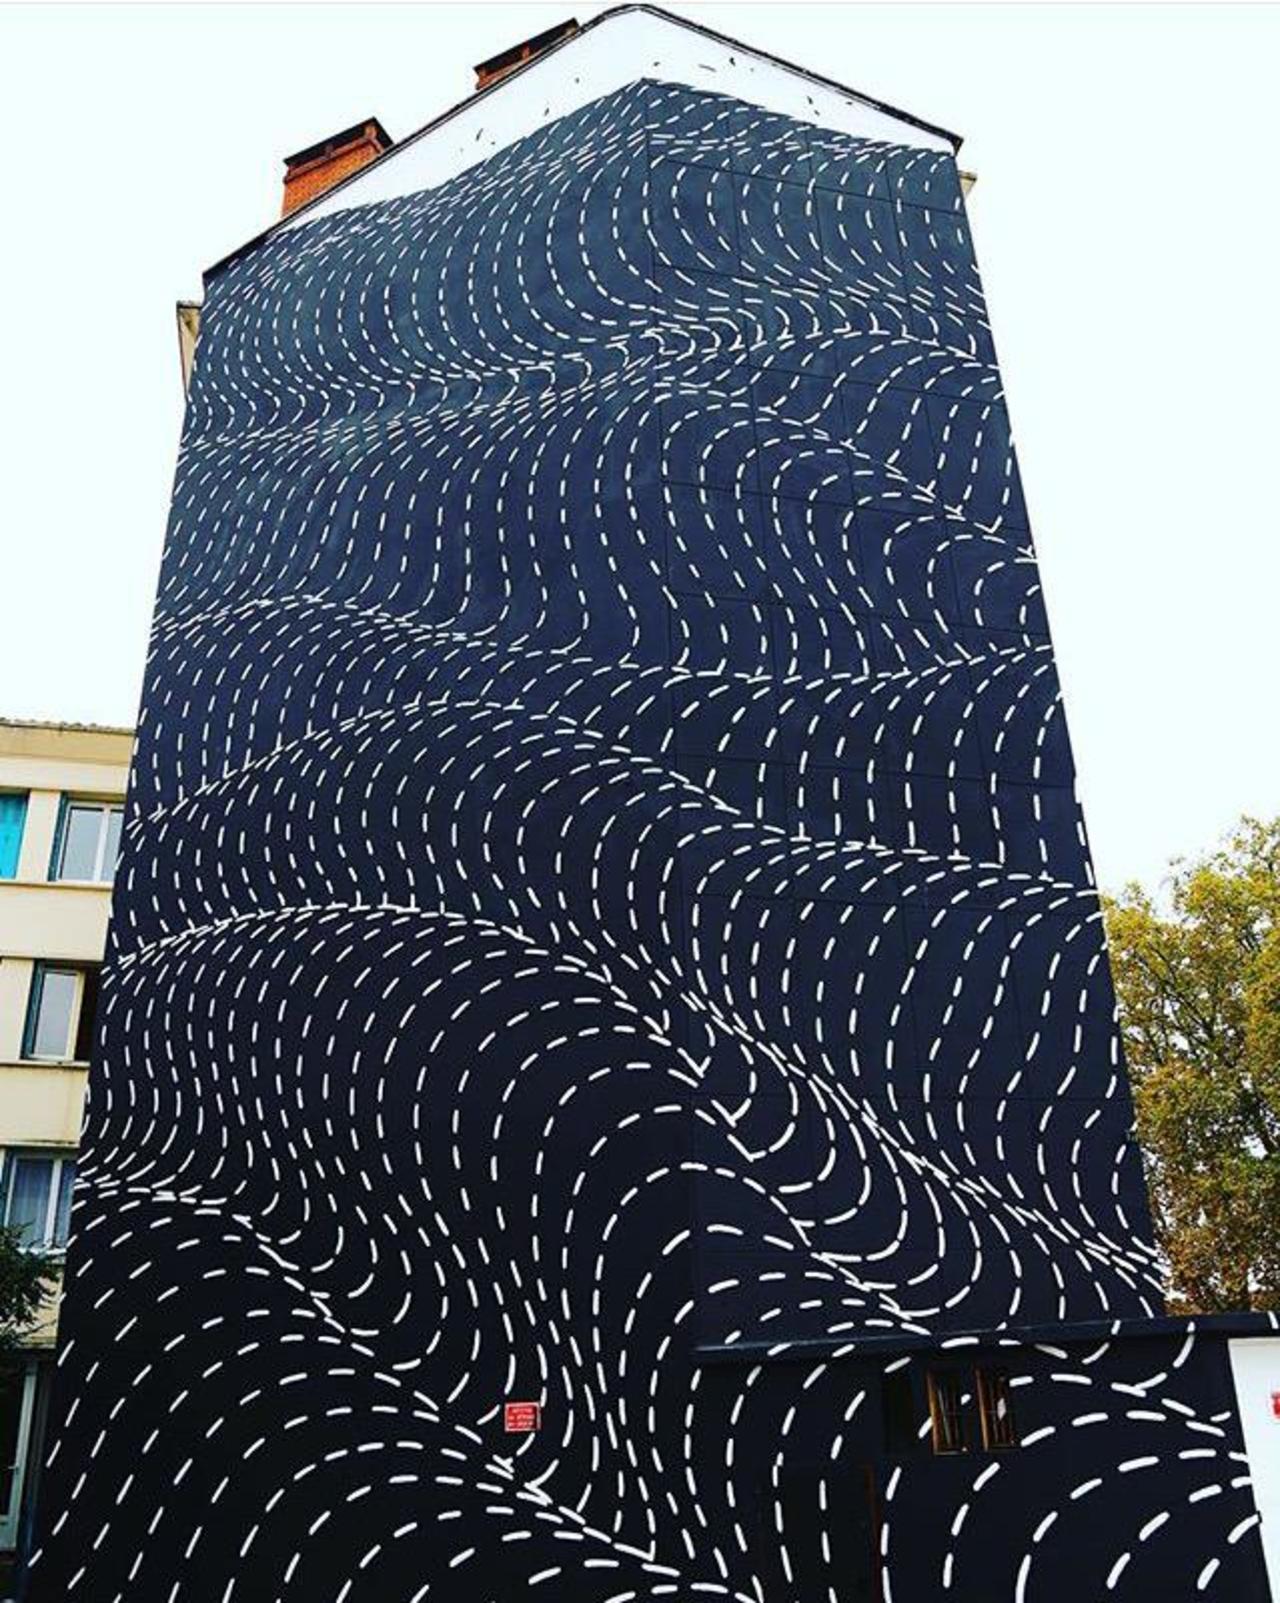 New Street Art by Brendan Monroe's for WOPS ! Festival in Toulouse, France. 

#art #graffiti #mural #streetart https://t.co/zbbZzP053h